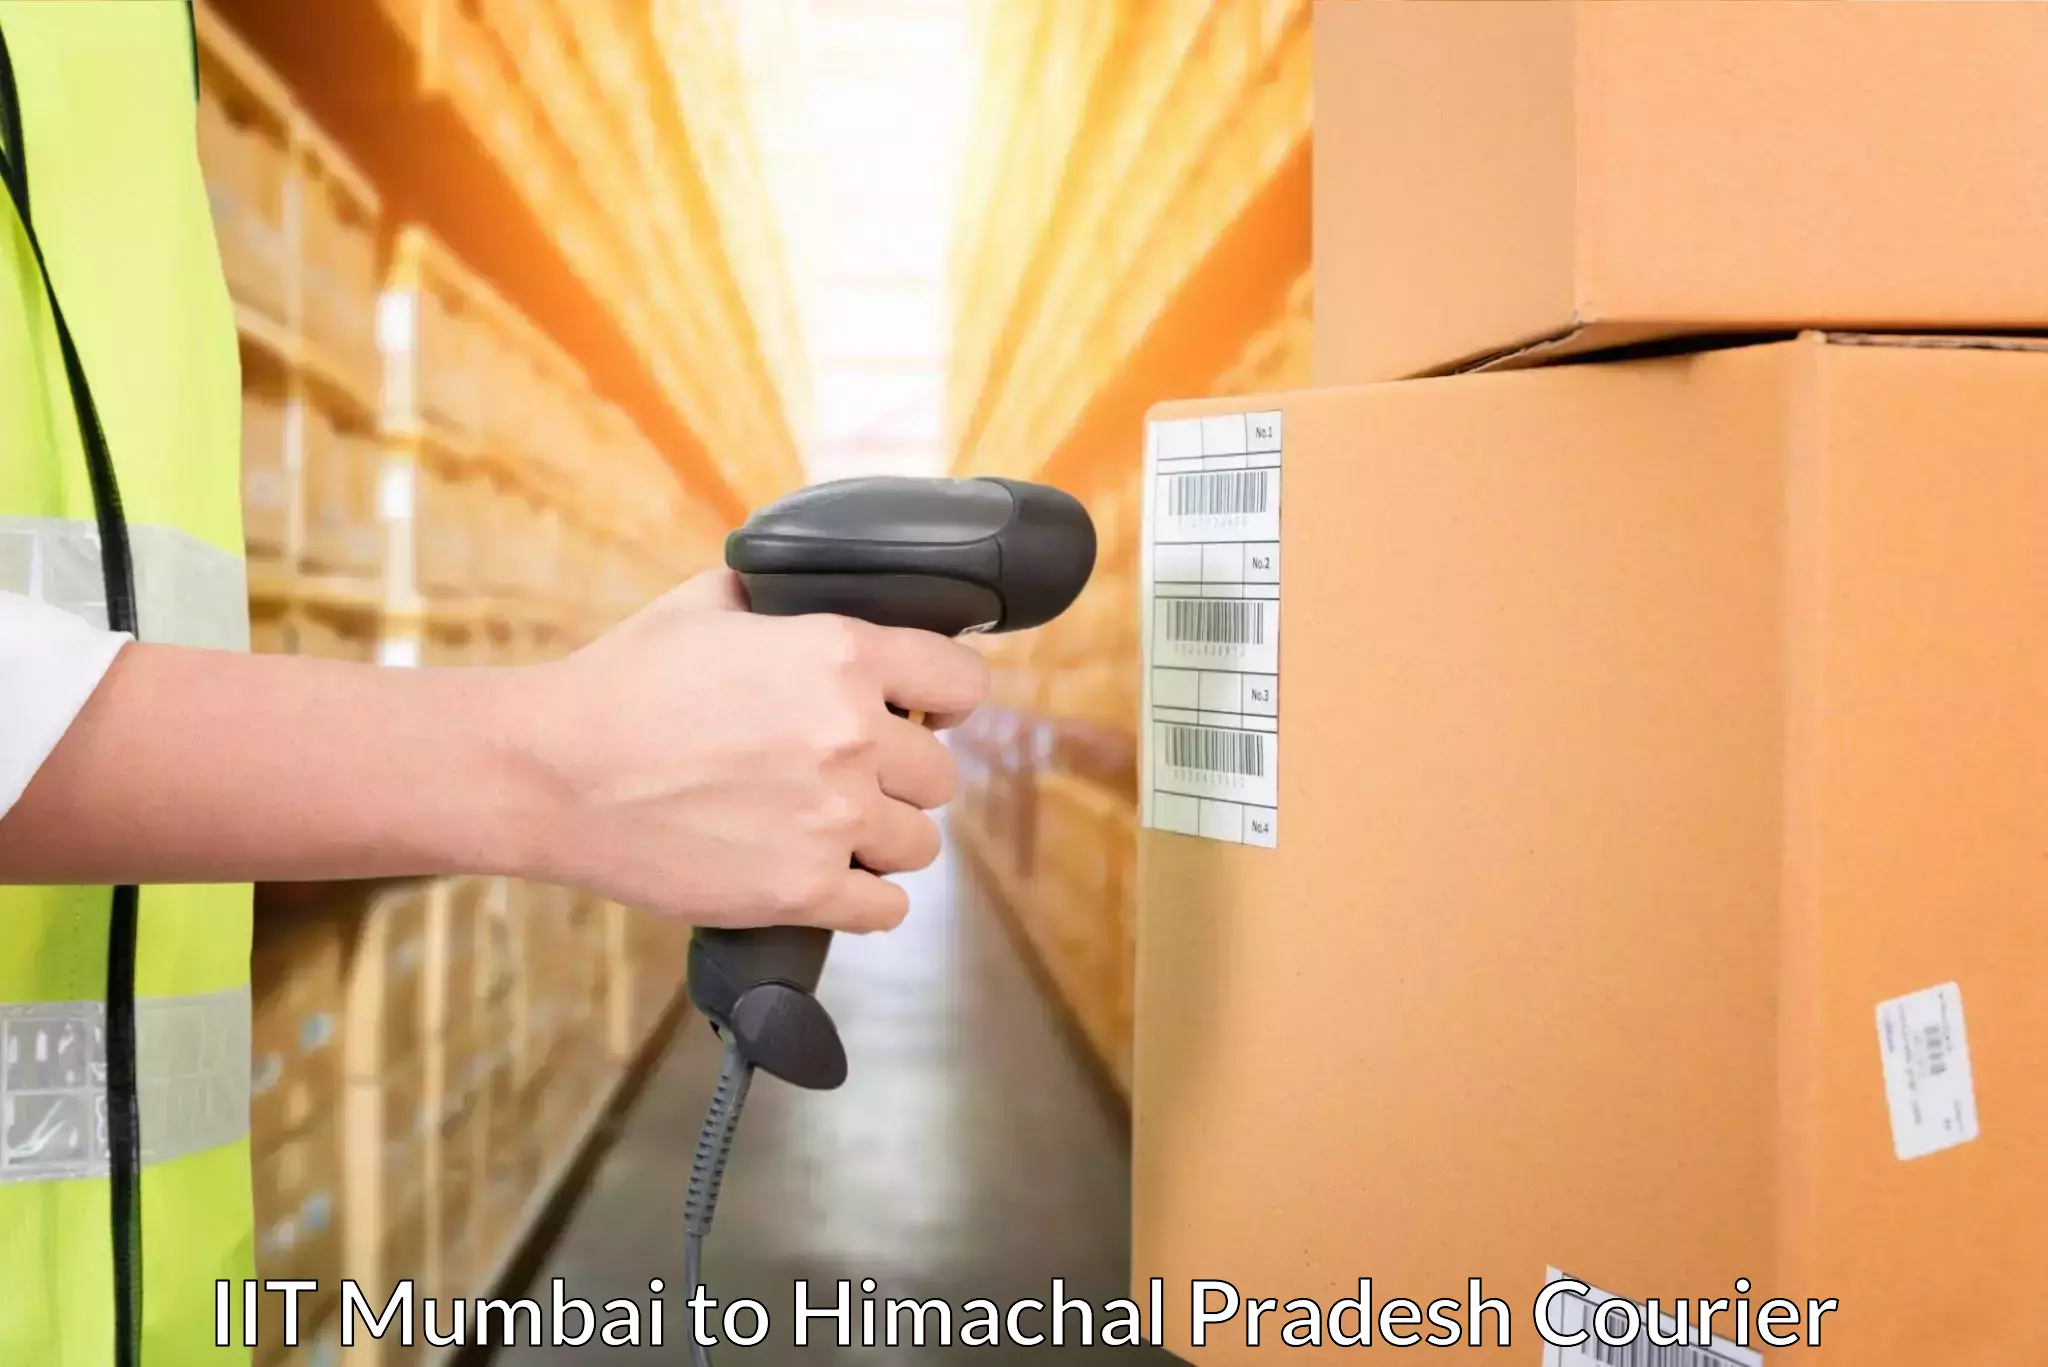 Speedy delivery service in IIT Mumbai to Himachal Pradesh